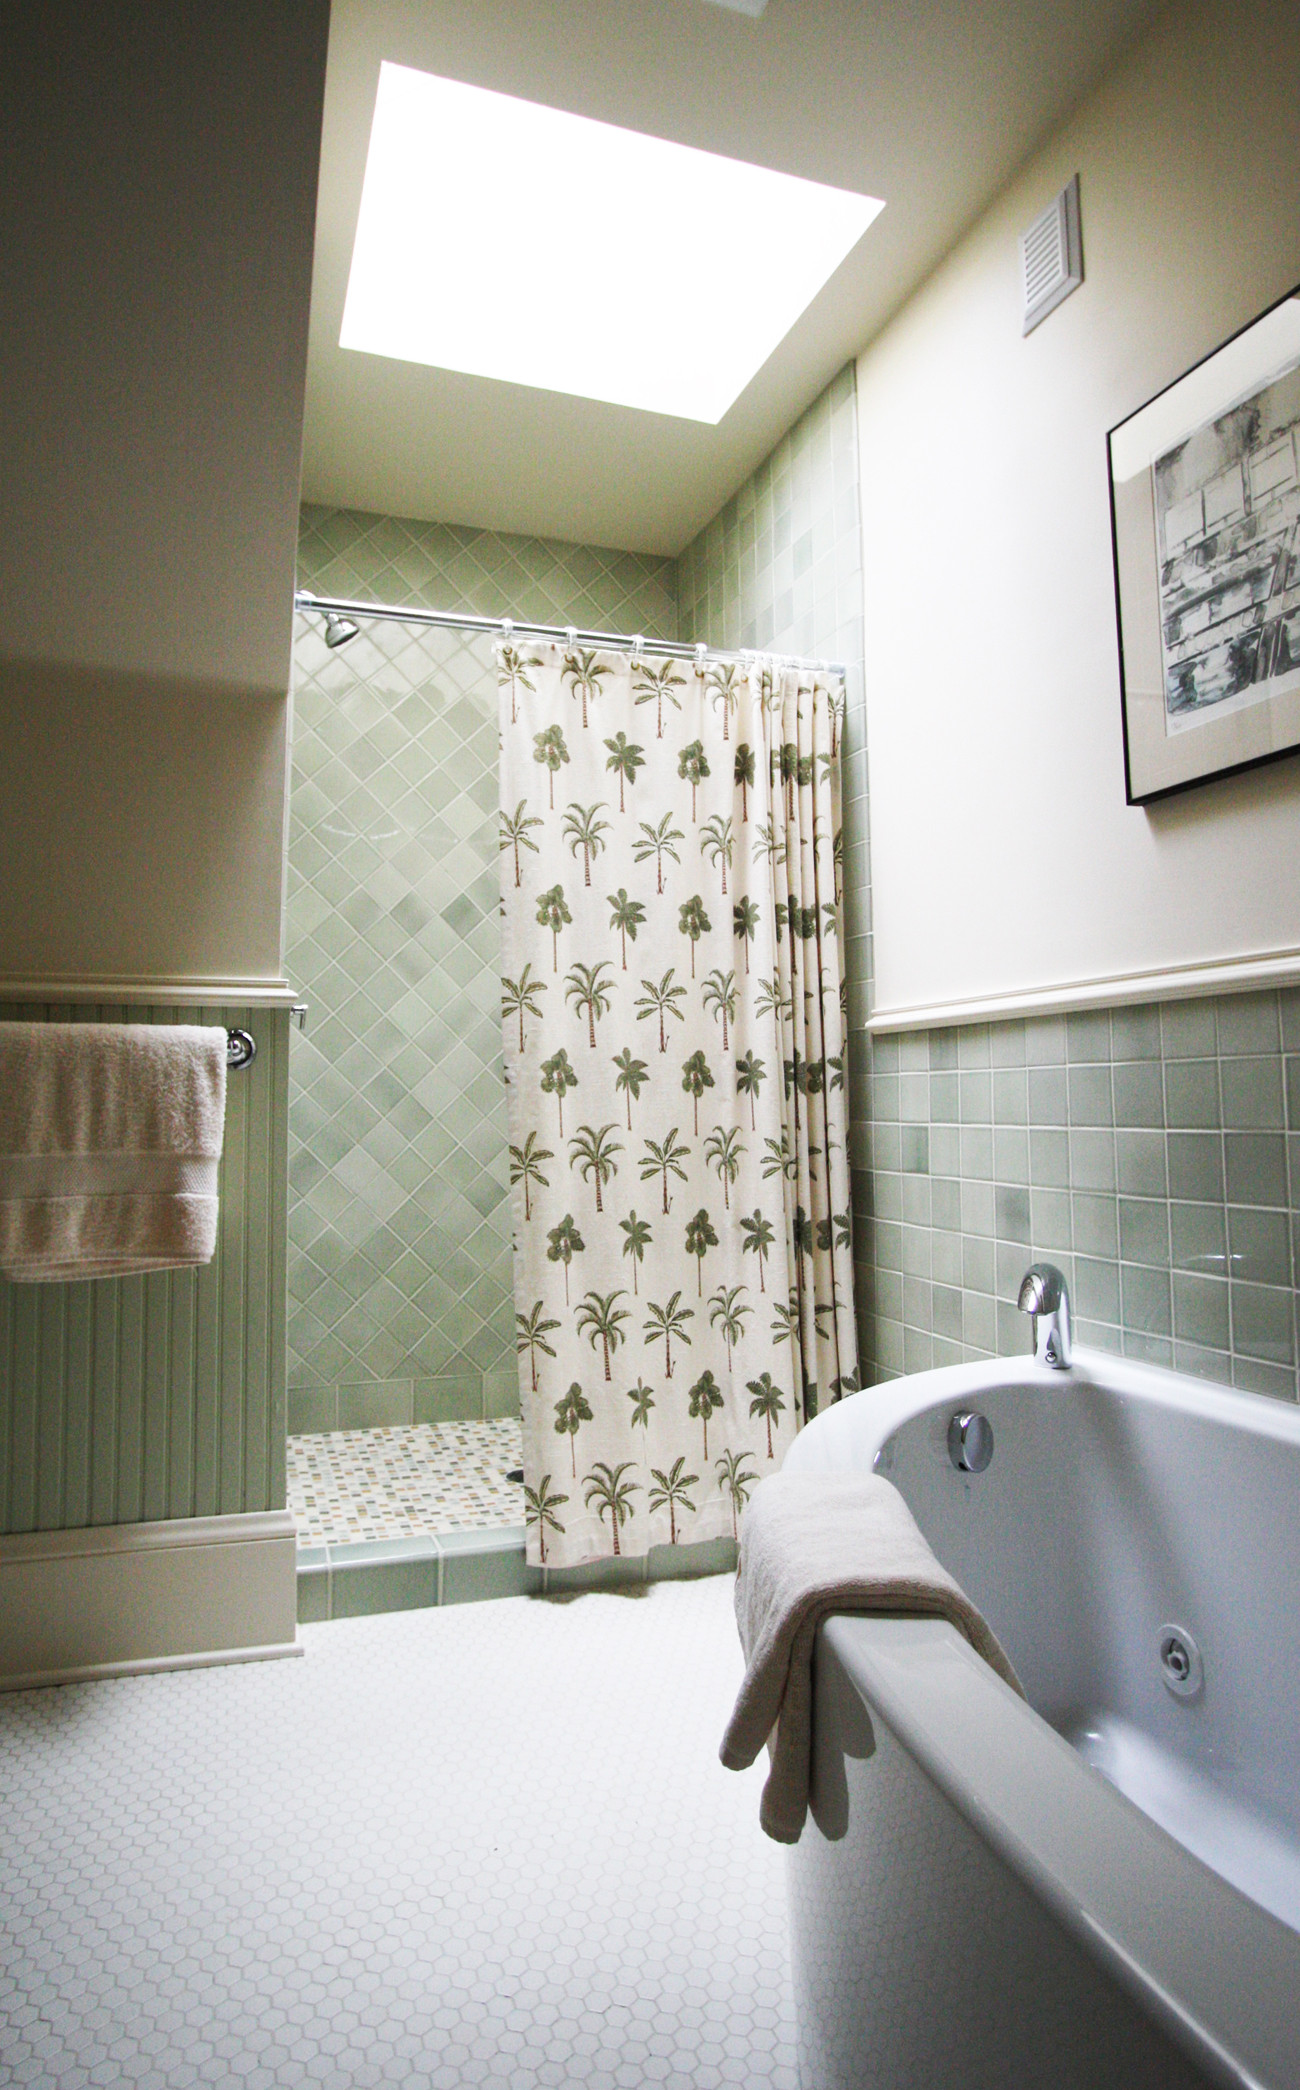 Bathroom Shower Floor Tile
 5 Bathroom Tile Ideas from Portland Home Remodels by